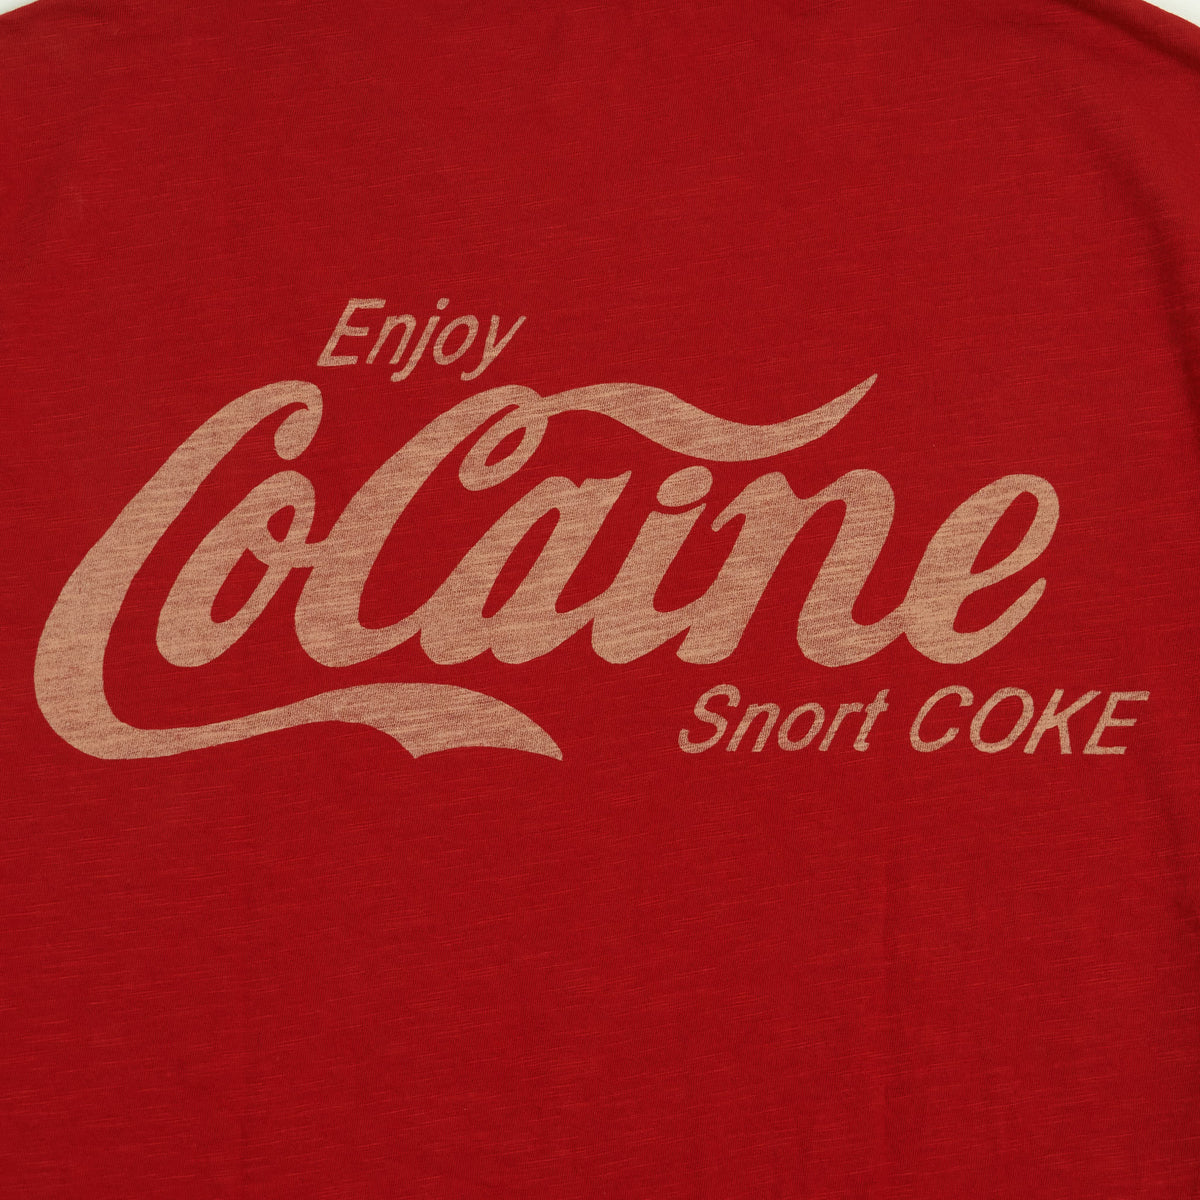 Johnson Motors Inc. CoCaine Snort Coke T-shirt